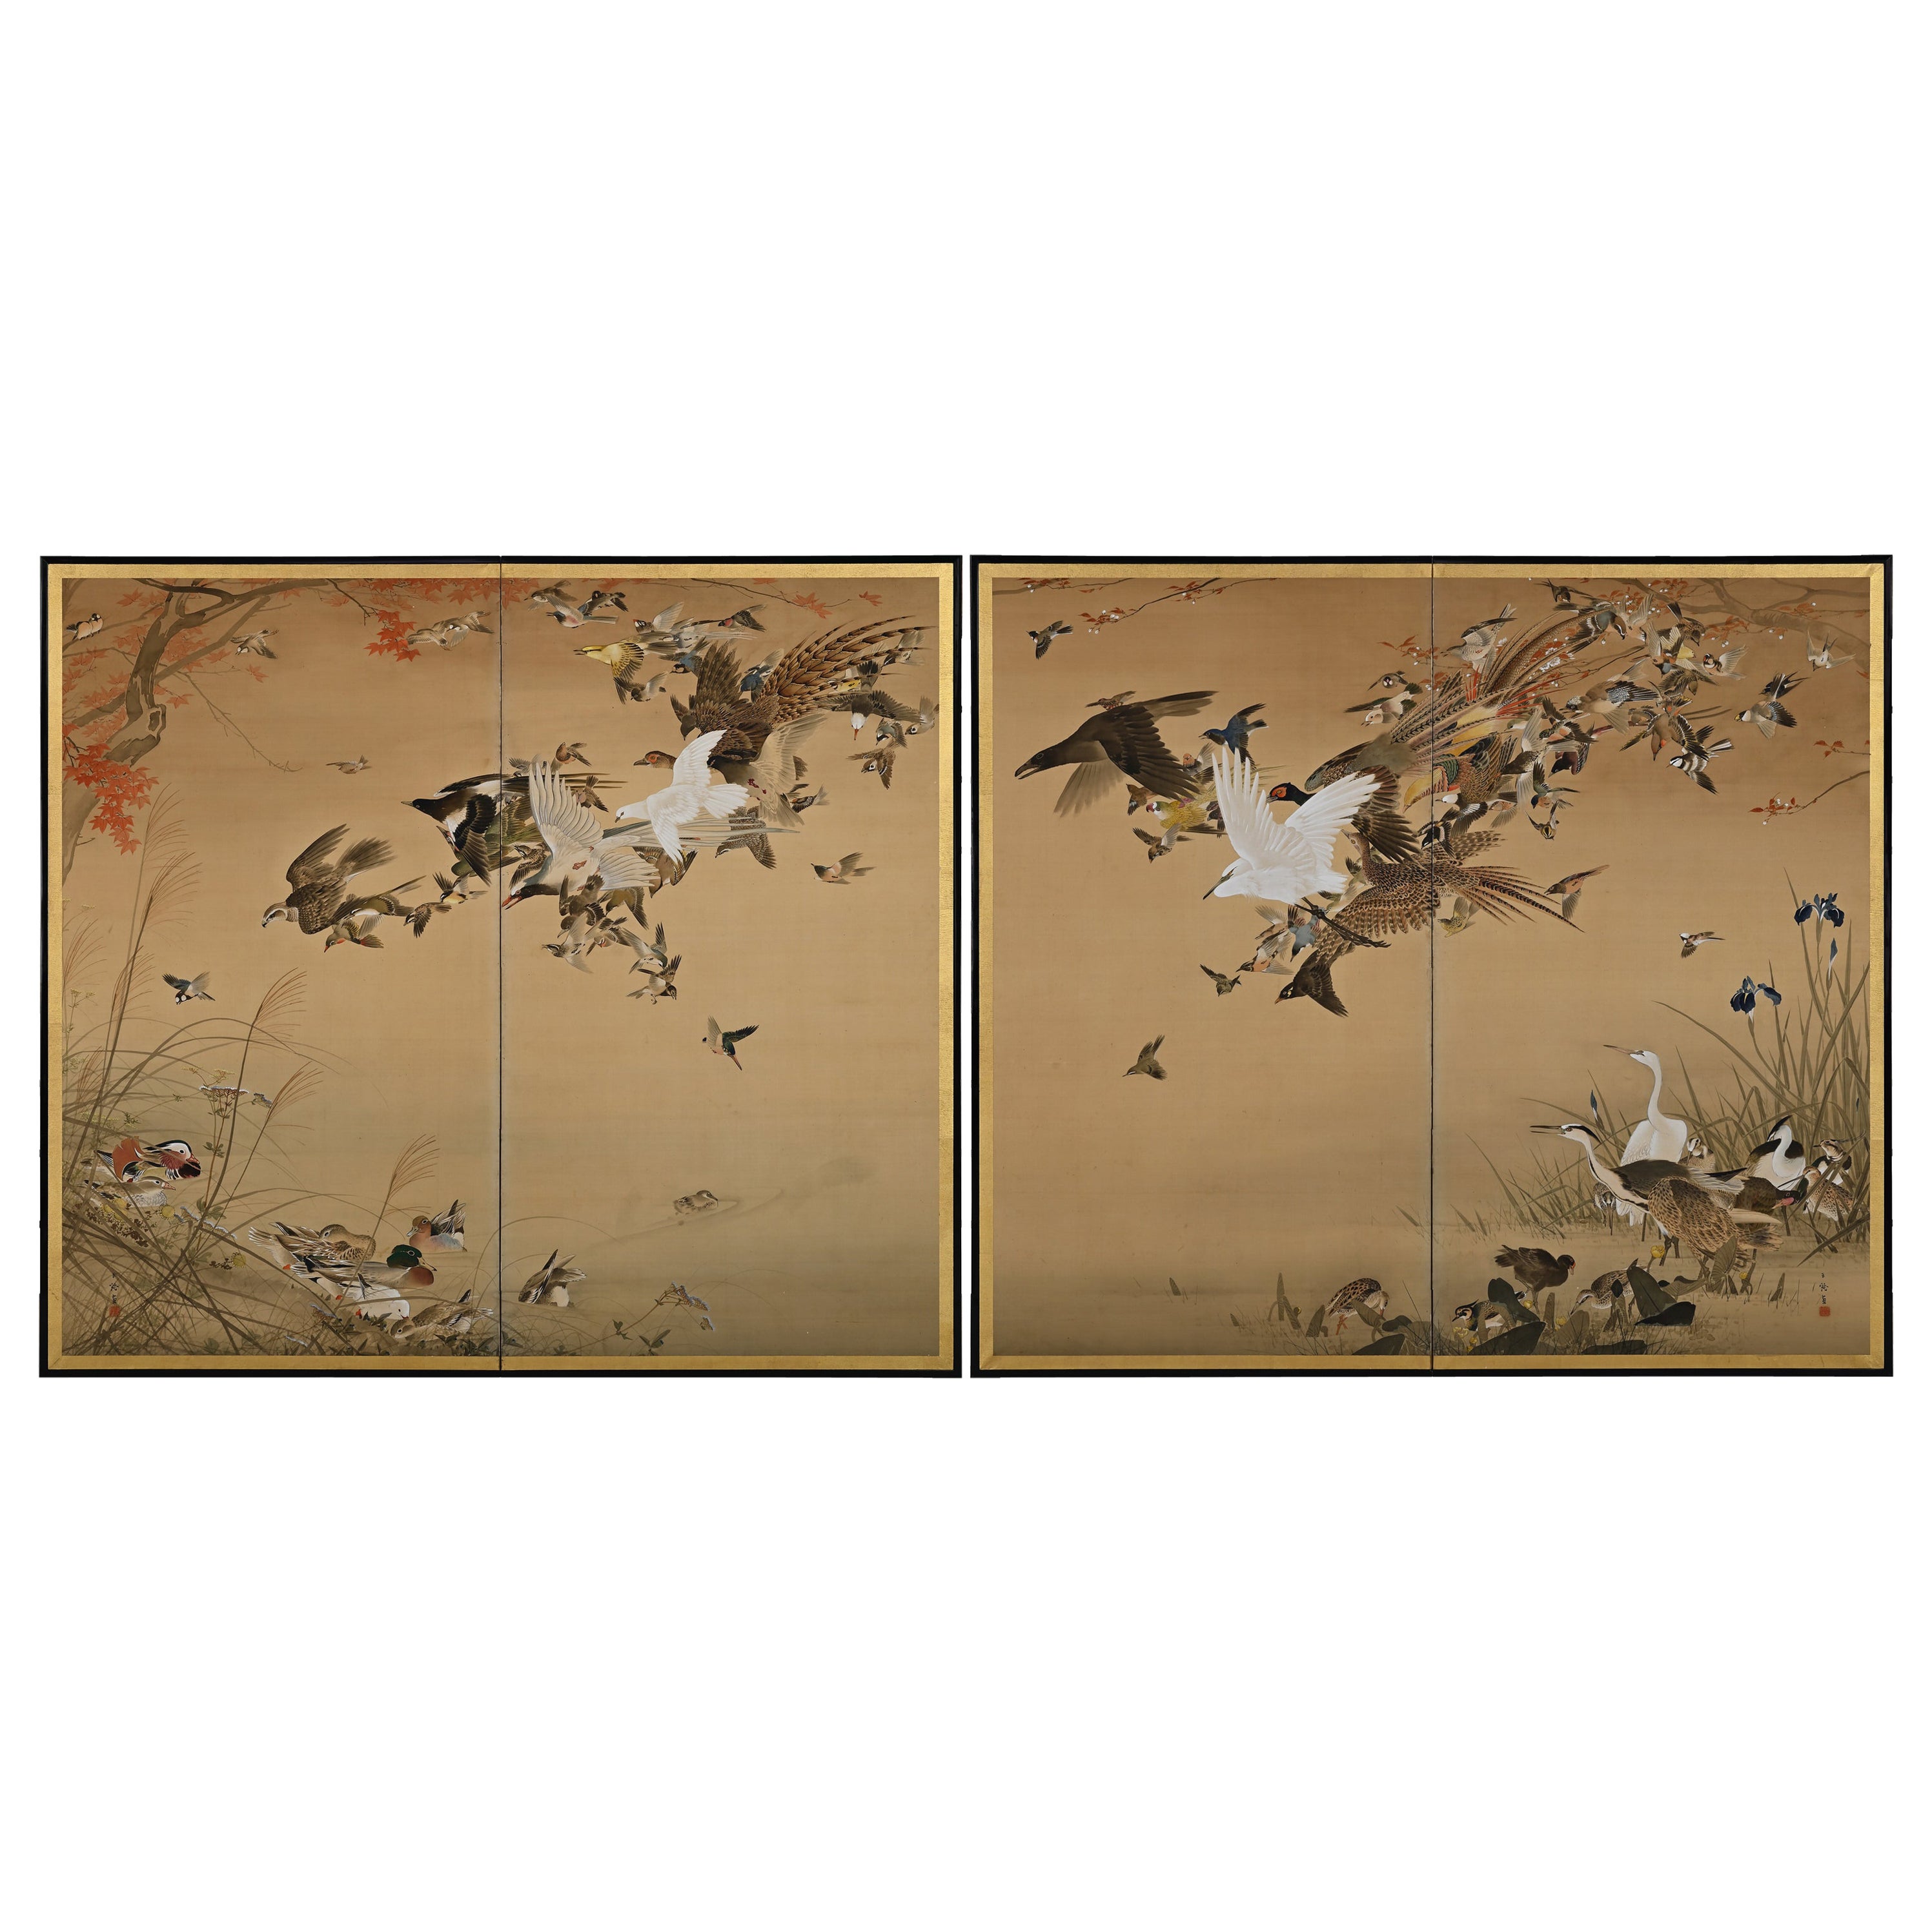 Meiji Period Japanese Screen Pair, One Hundred Birds by Hasegawa Gyokujun